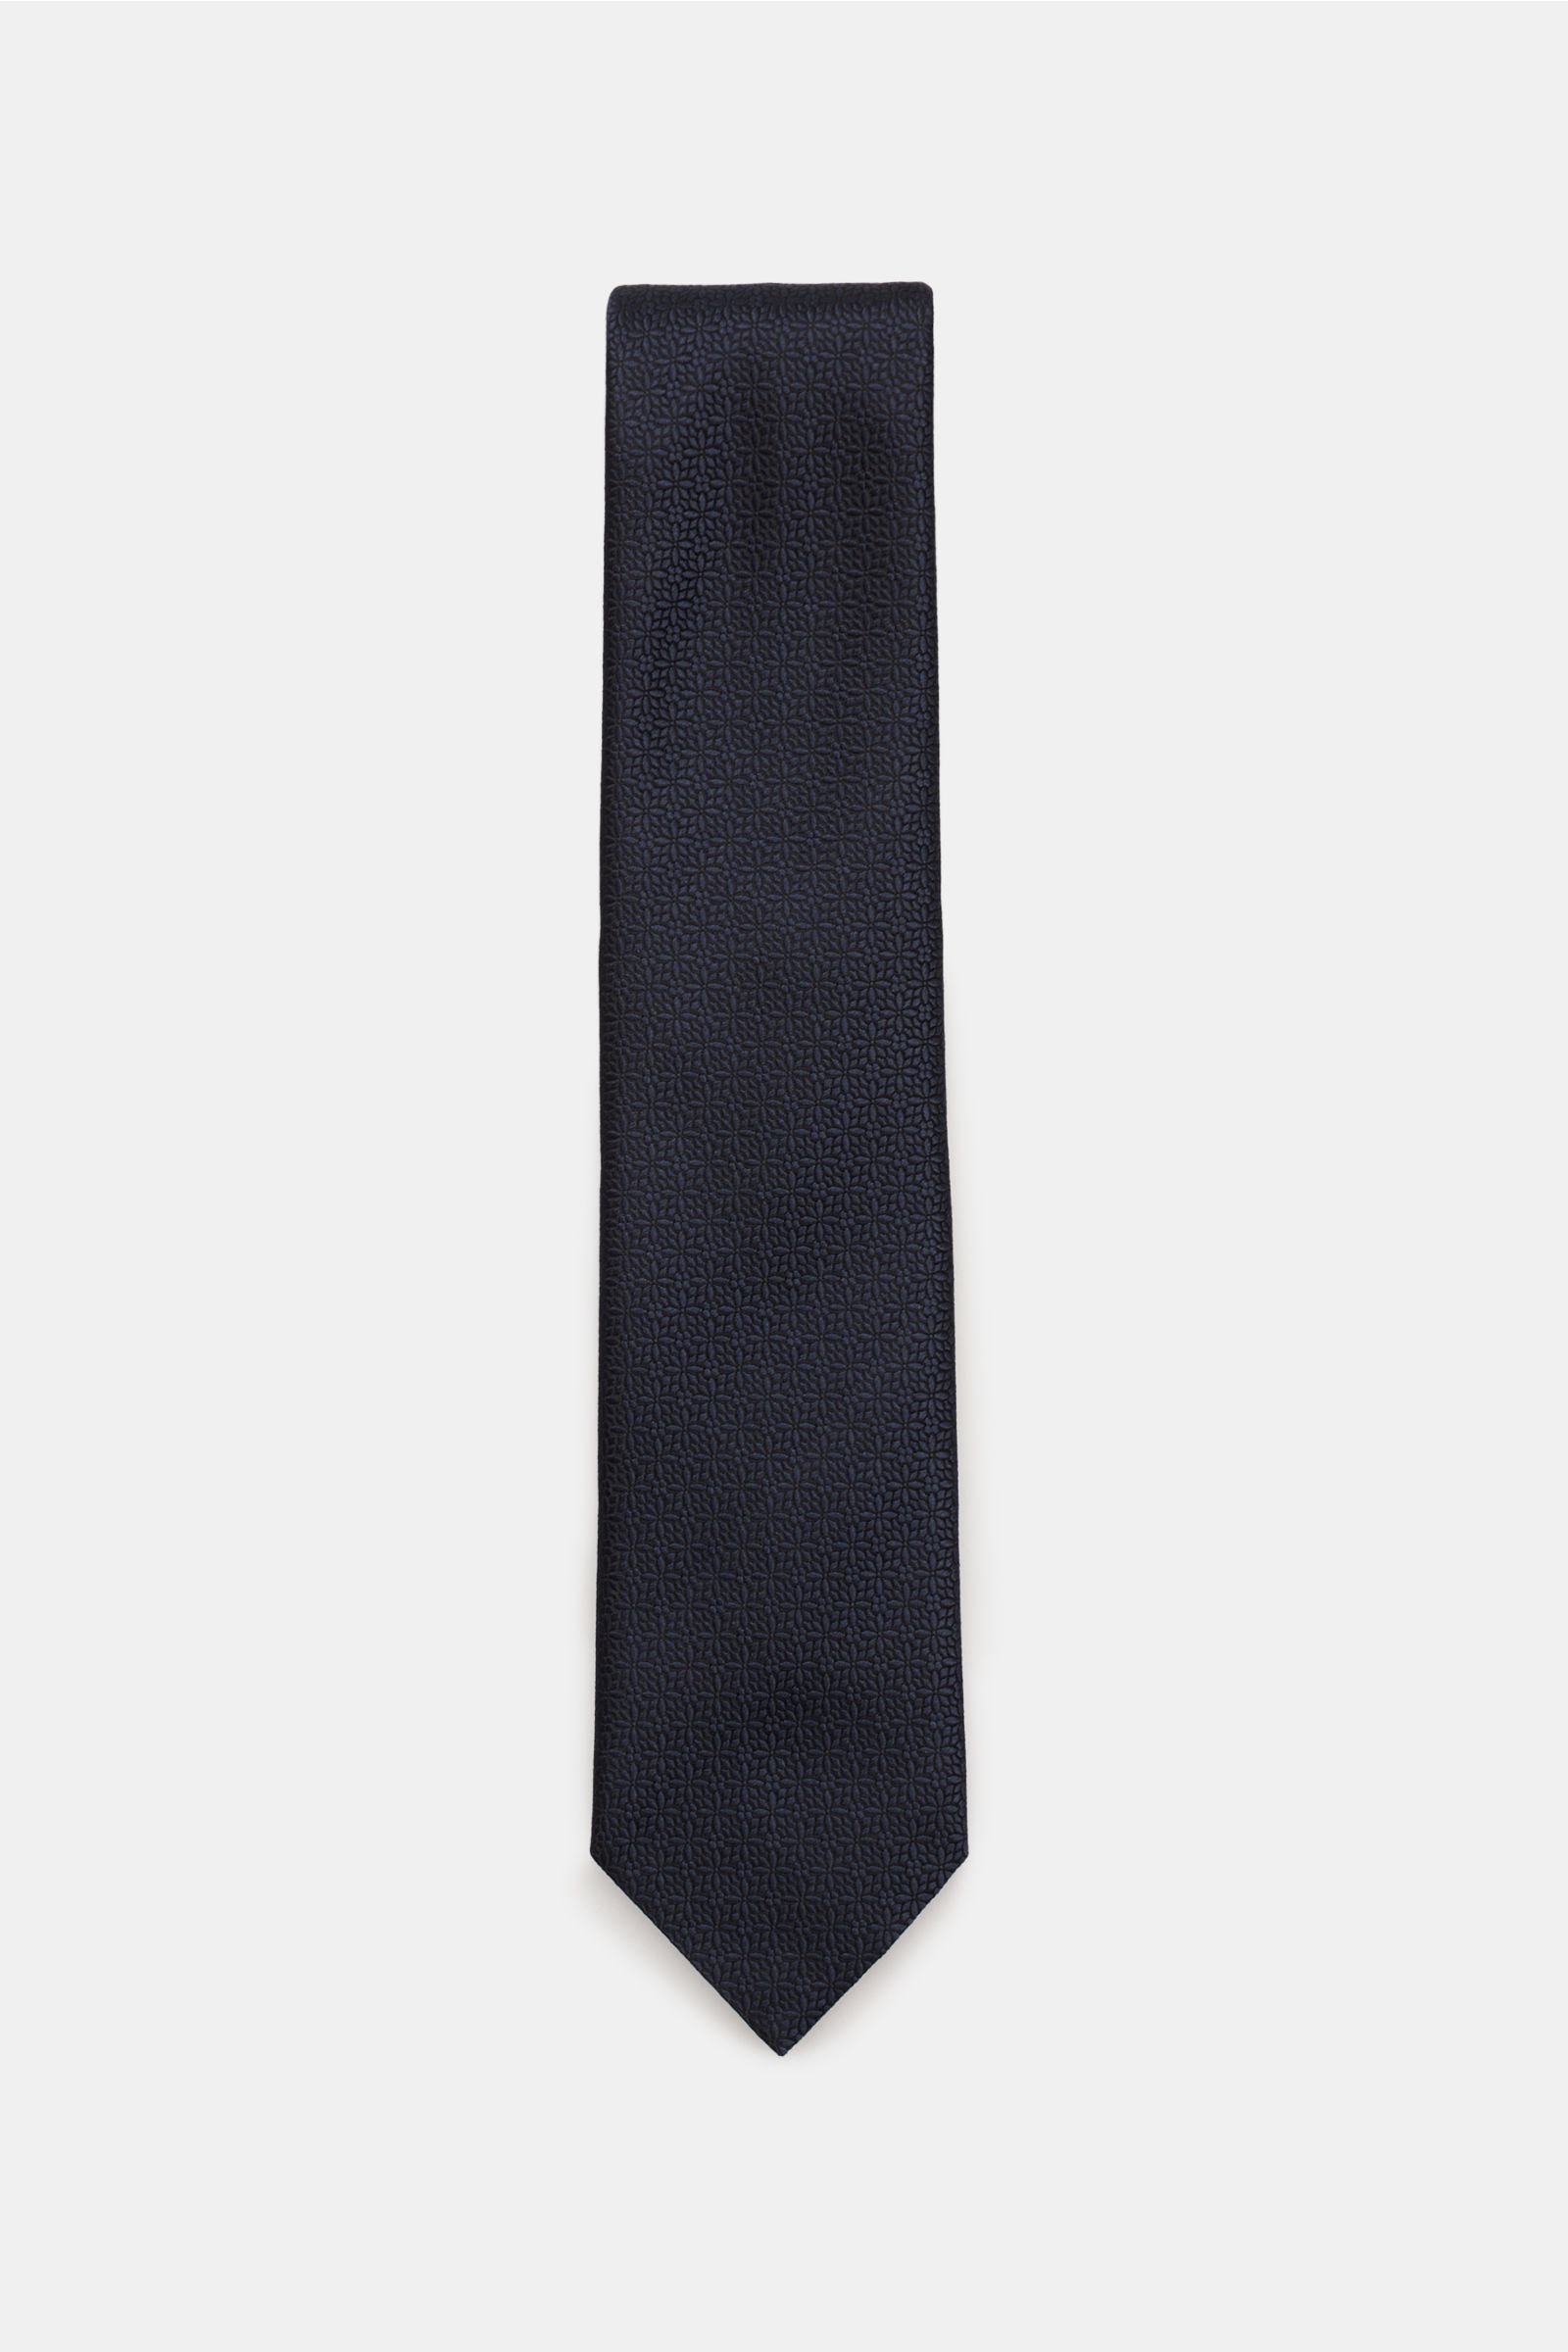 Silk tie dark navy patterned